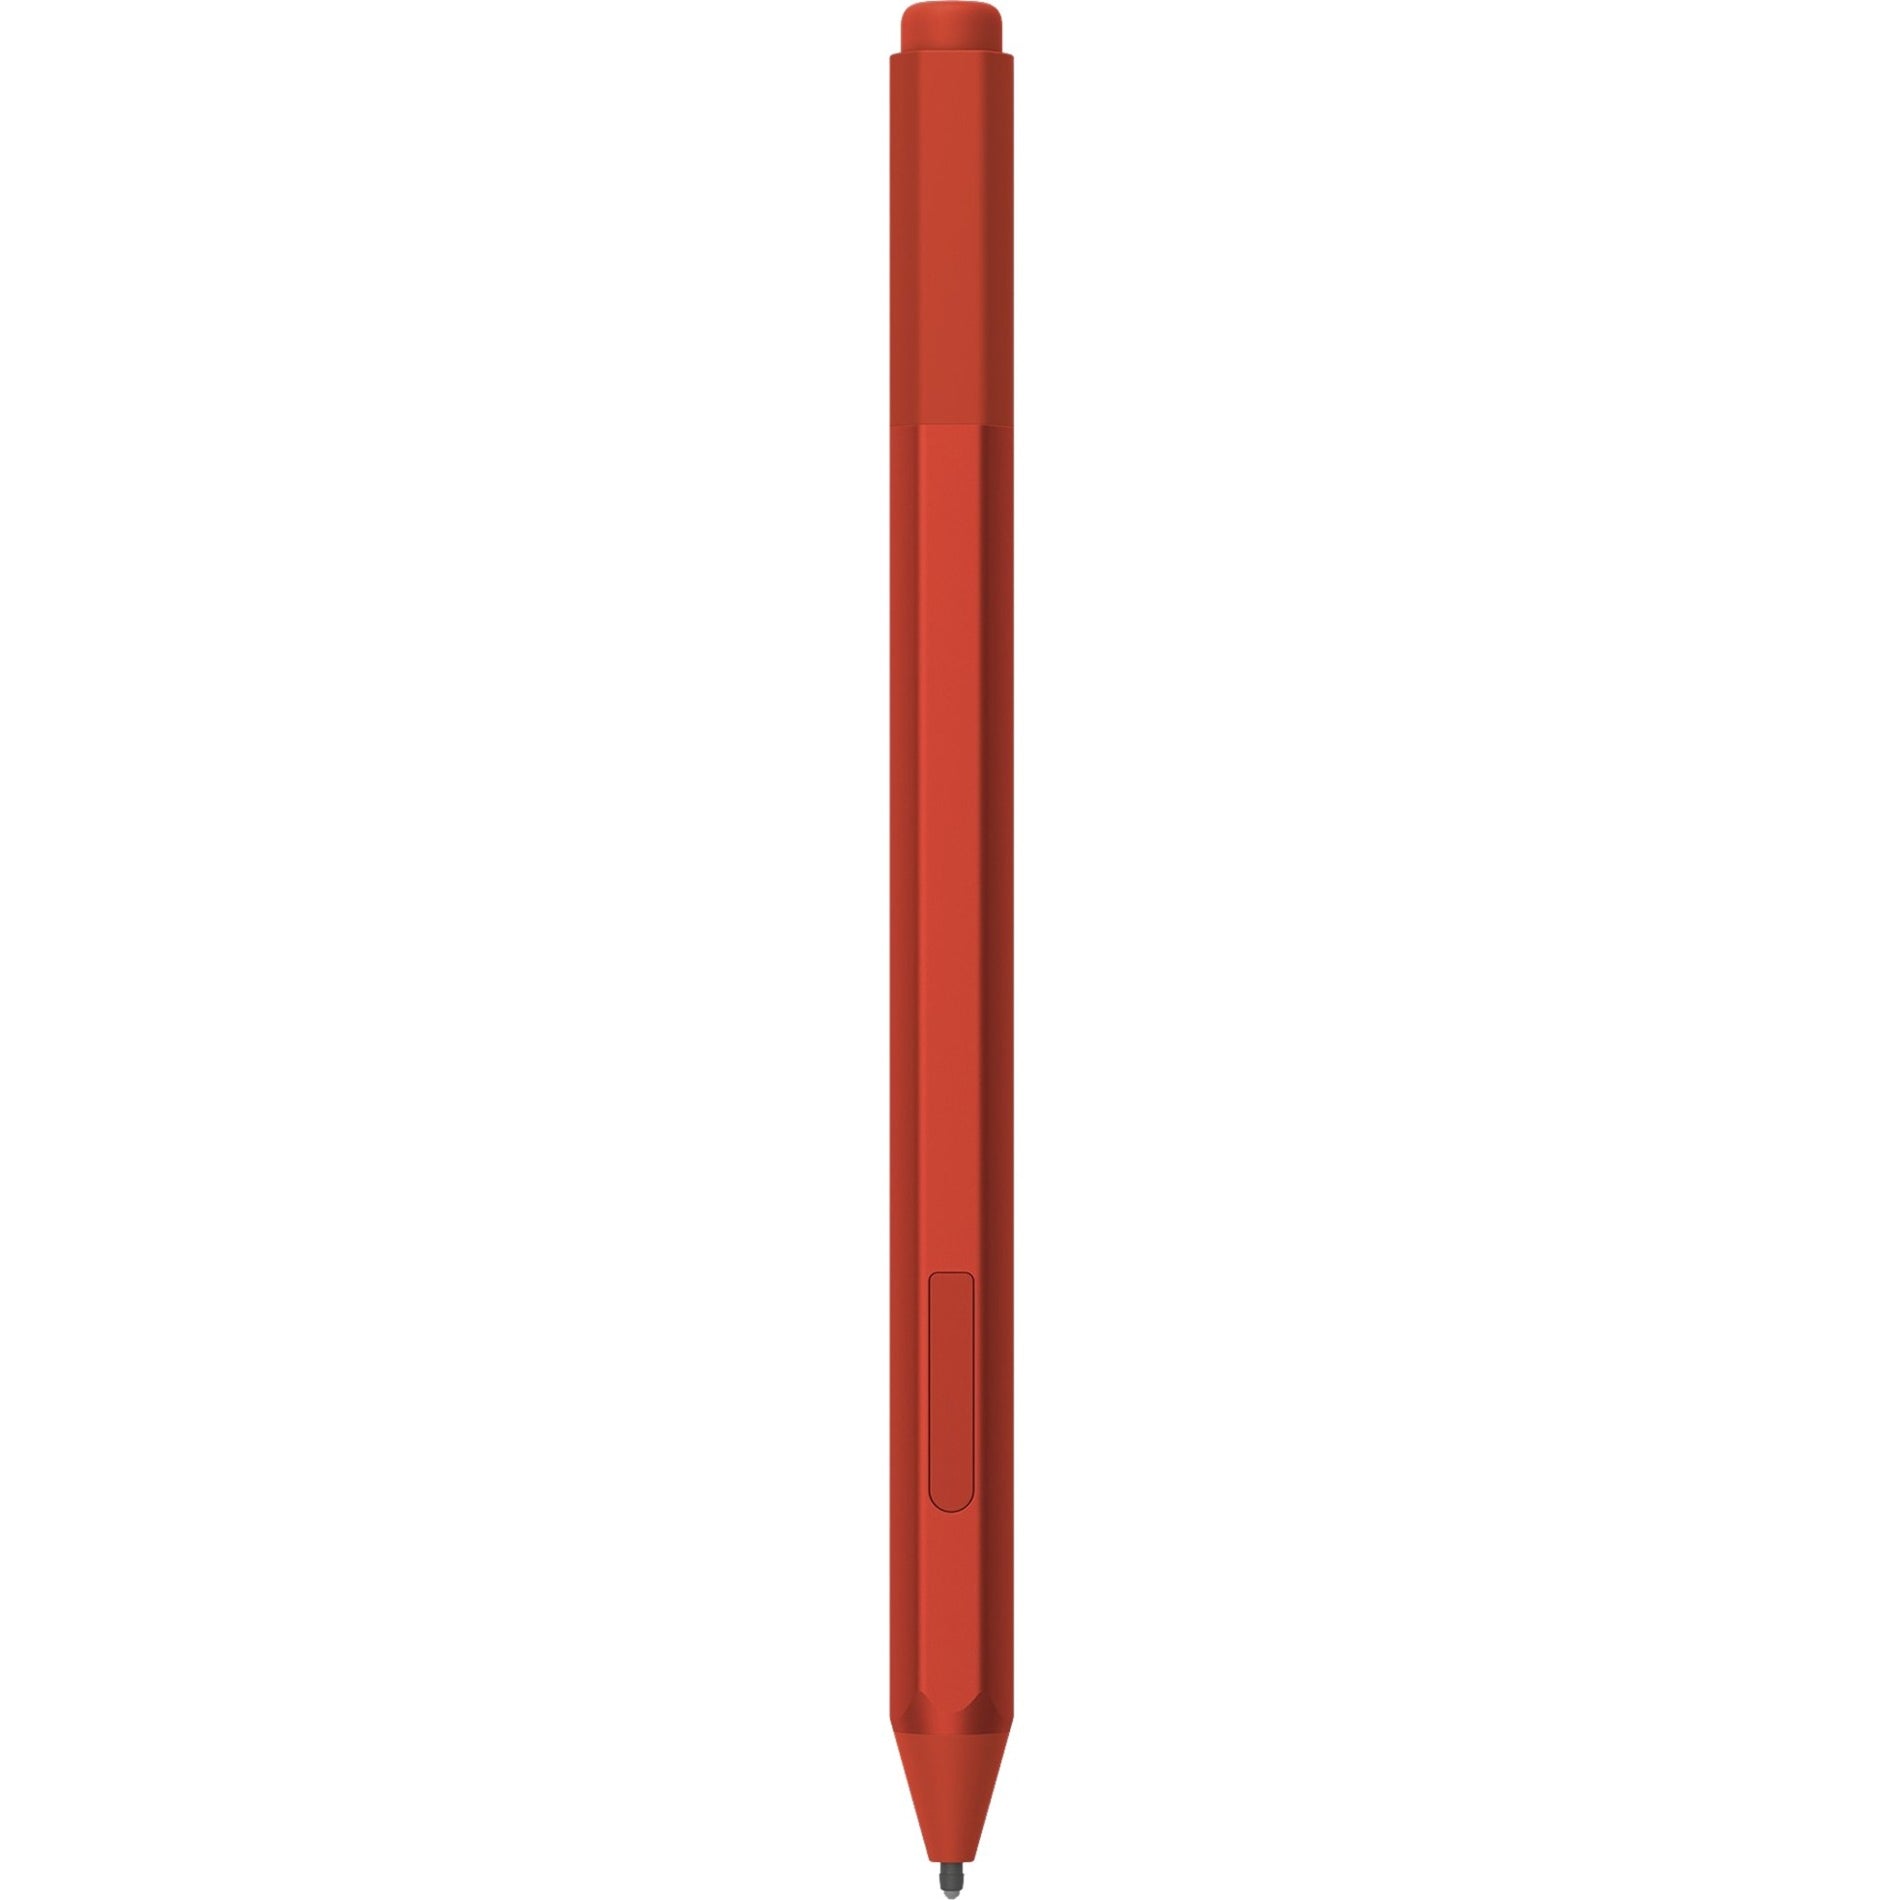 Microsoft EYV-00041 Surface Pen Stylus Bluetooth fähiger Tablet und Notebook Stift